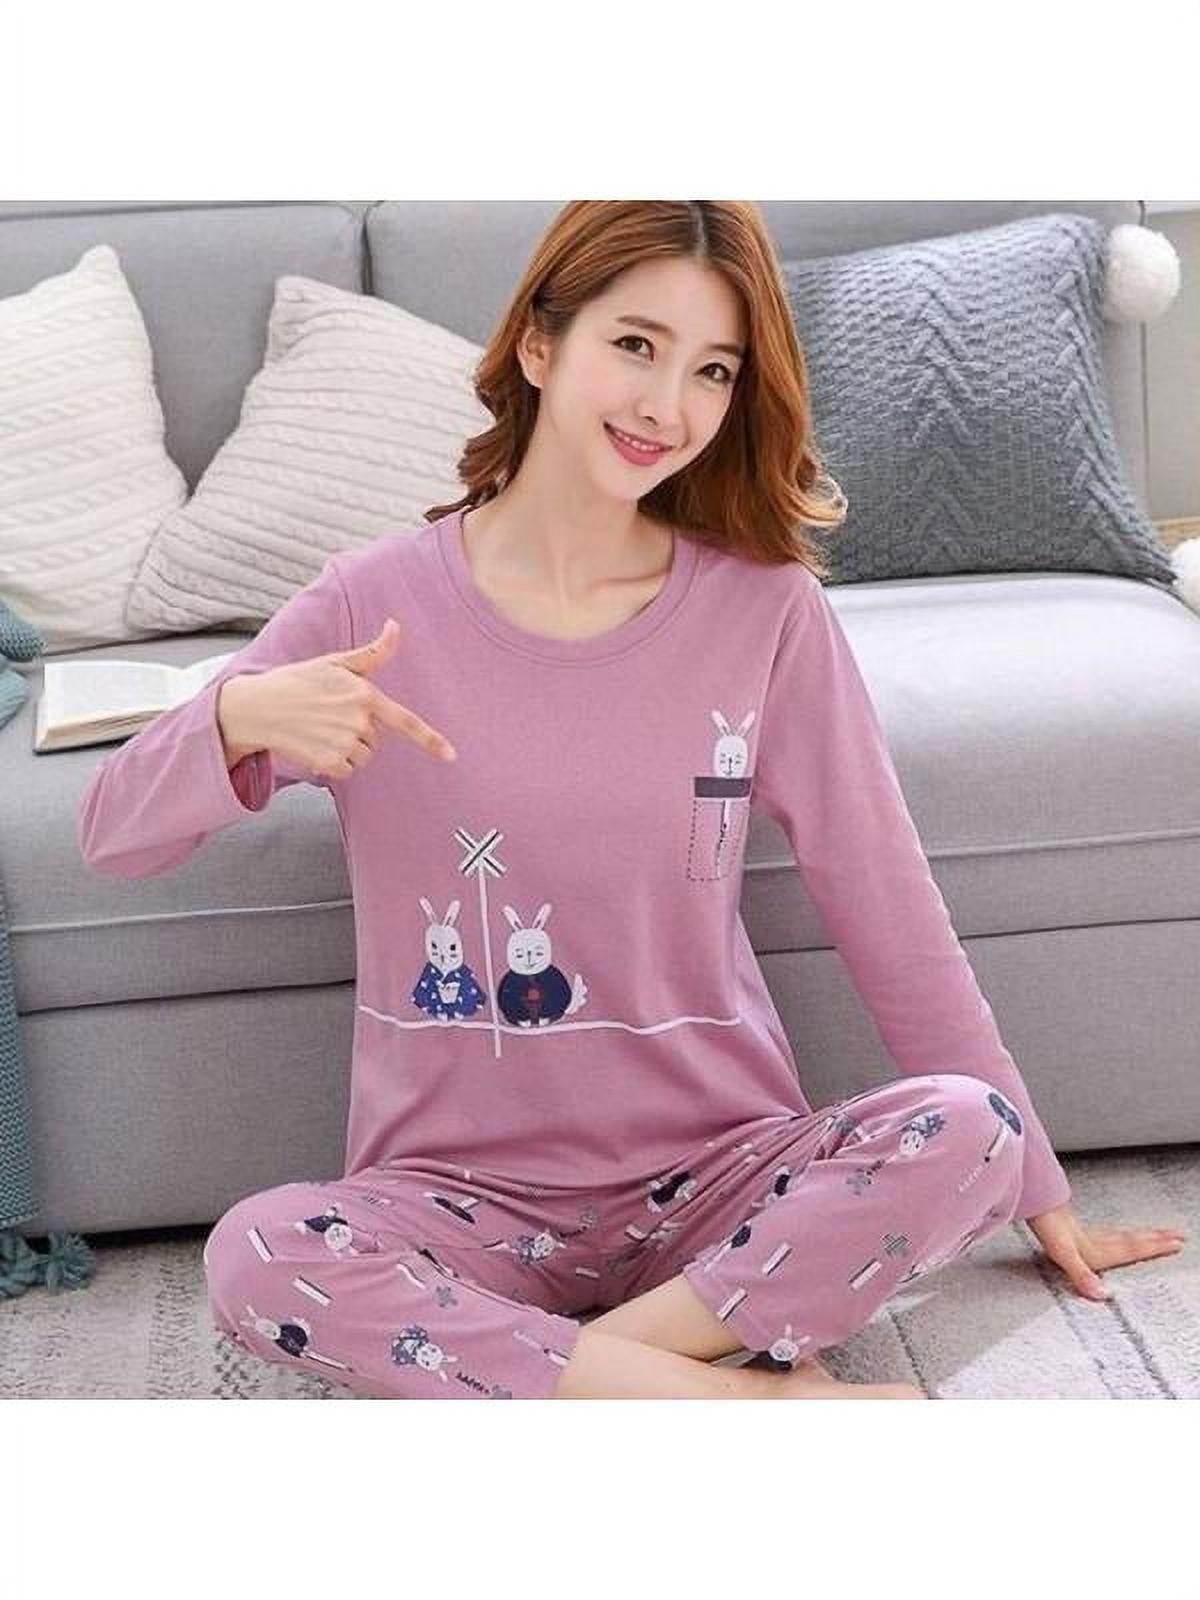 Kids girls Cute cartoon pajamas set 2T-7T cotton sleepwear Long-sleeved pants 